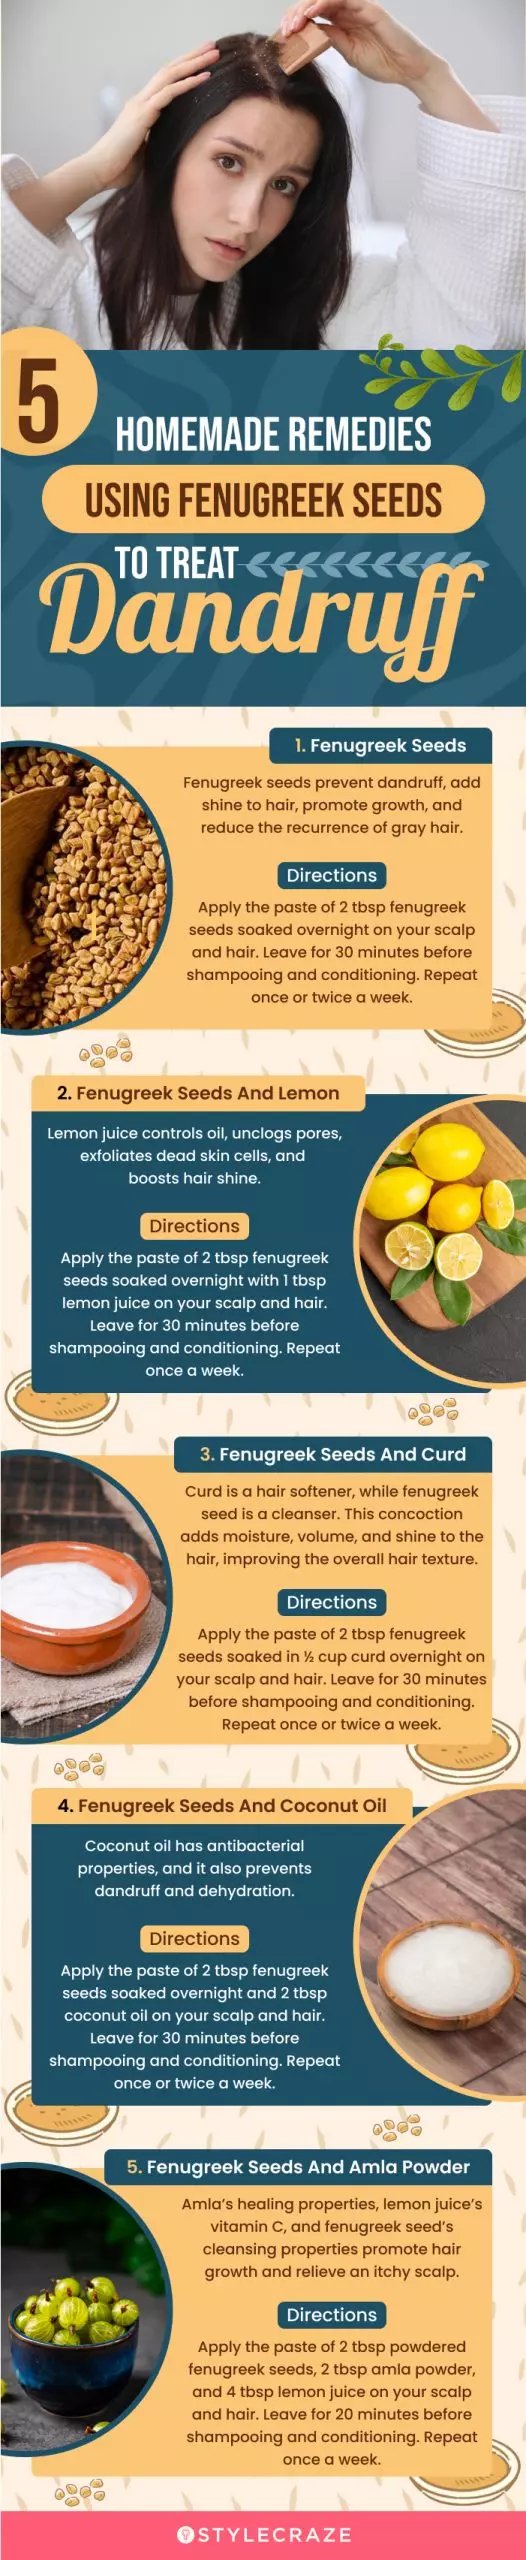 5 homemade remedies of fenugreek seeds to treat dandruff (infographic)